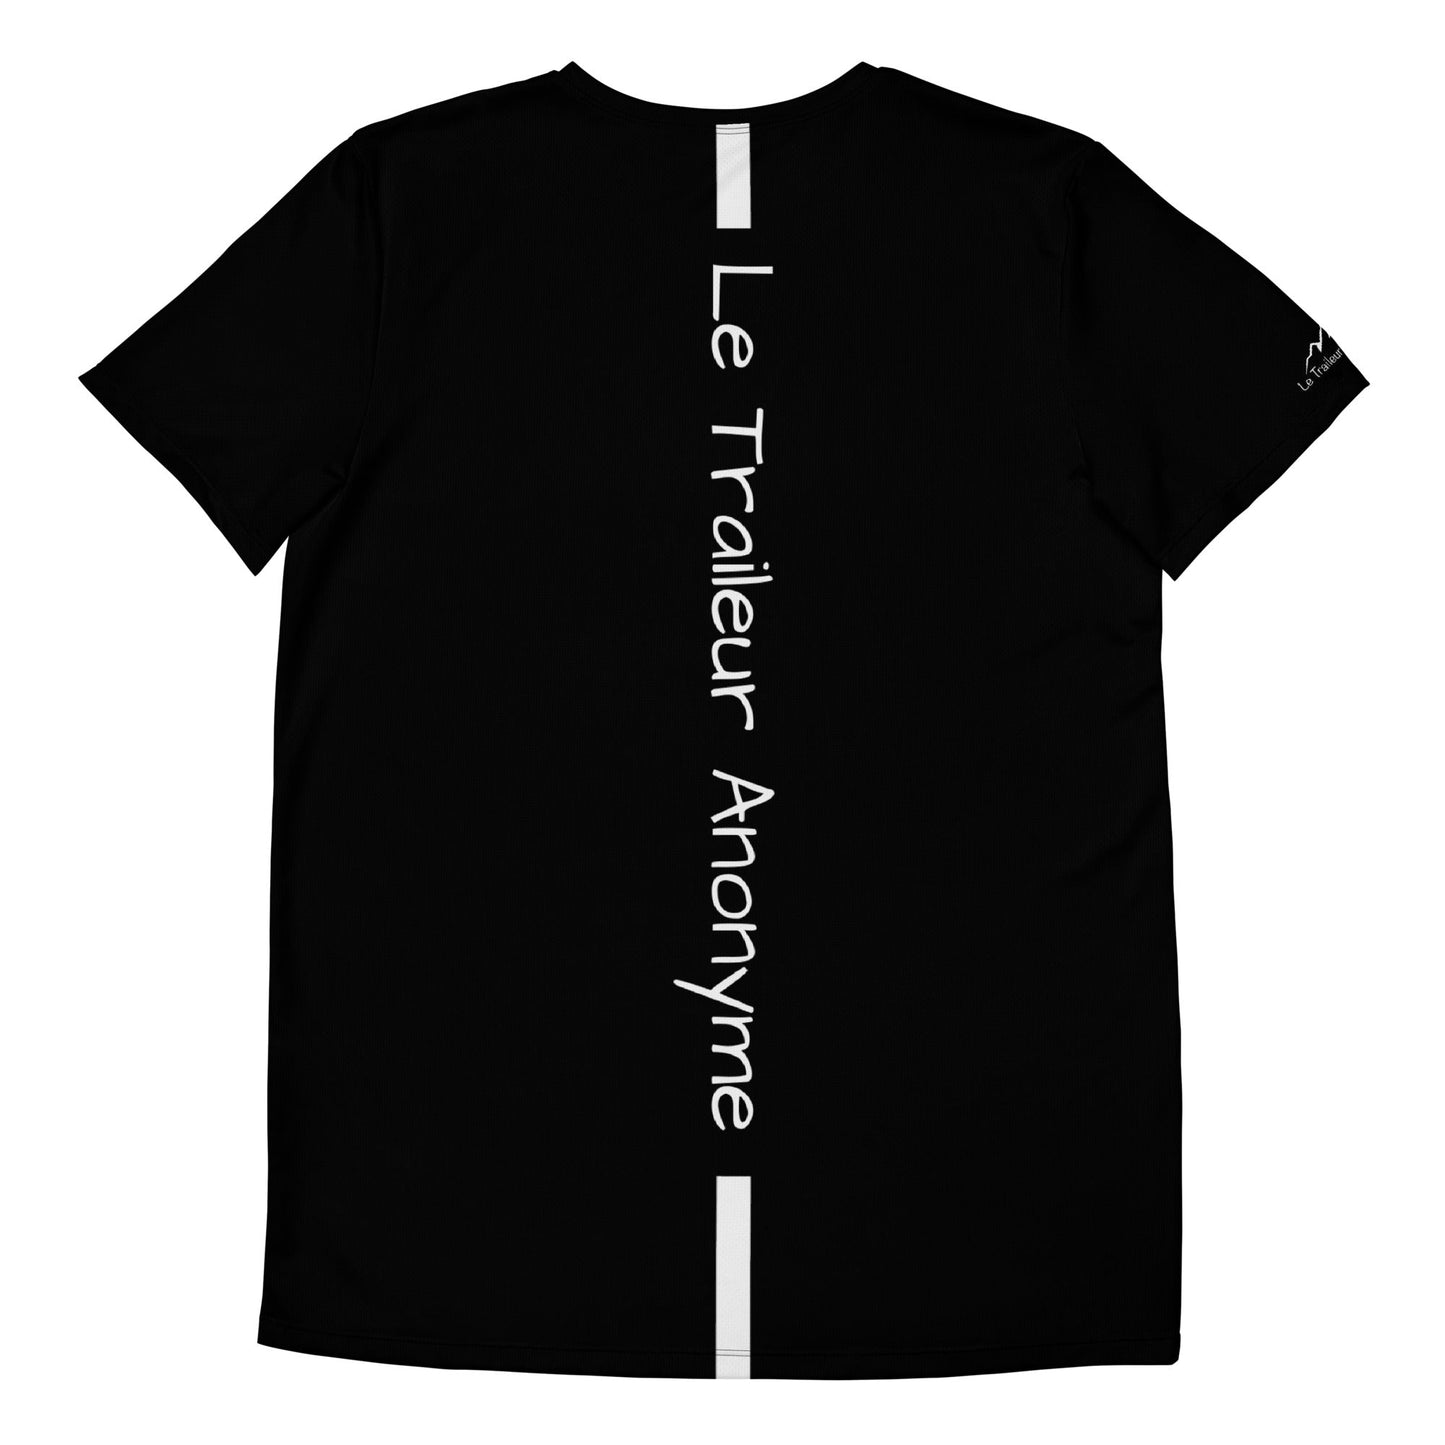 T-Shirt Running Homme - Esprit Trail - Le Traileur Anonyme